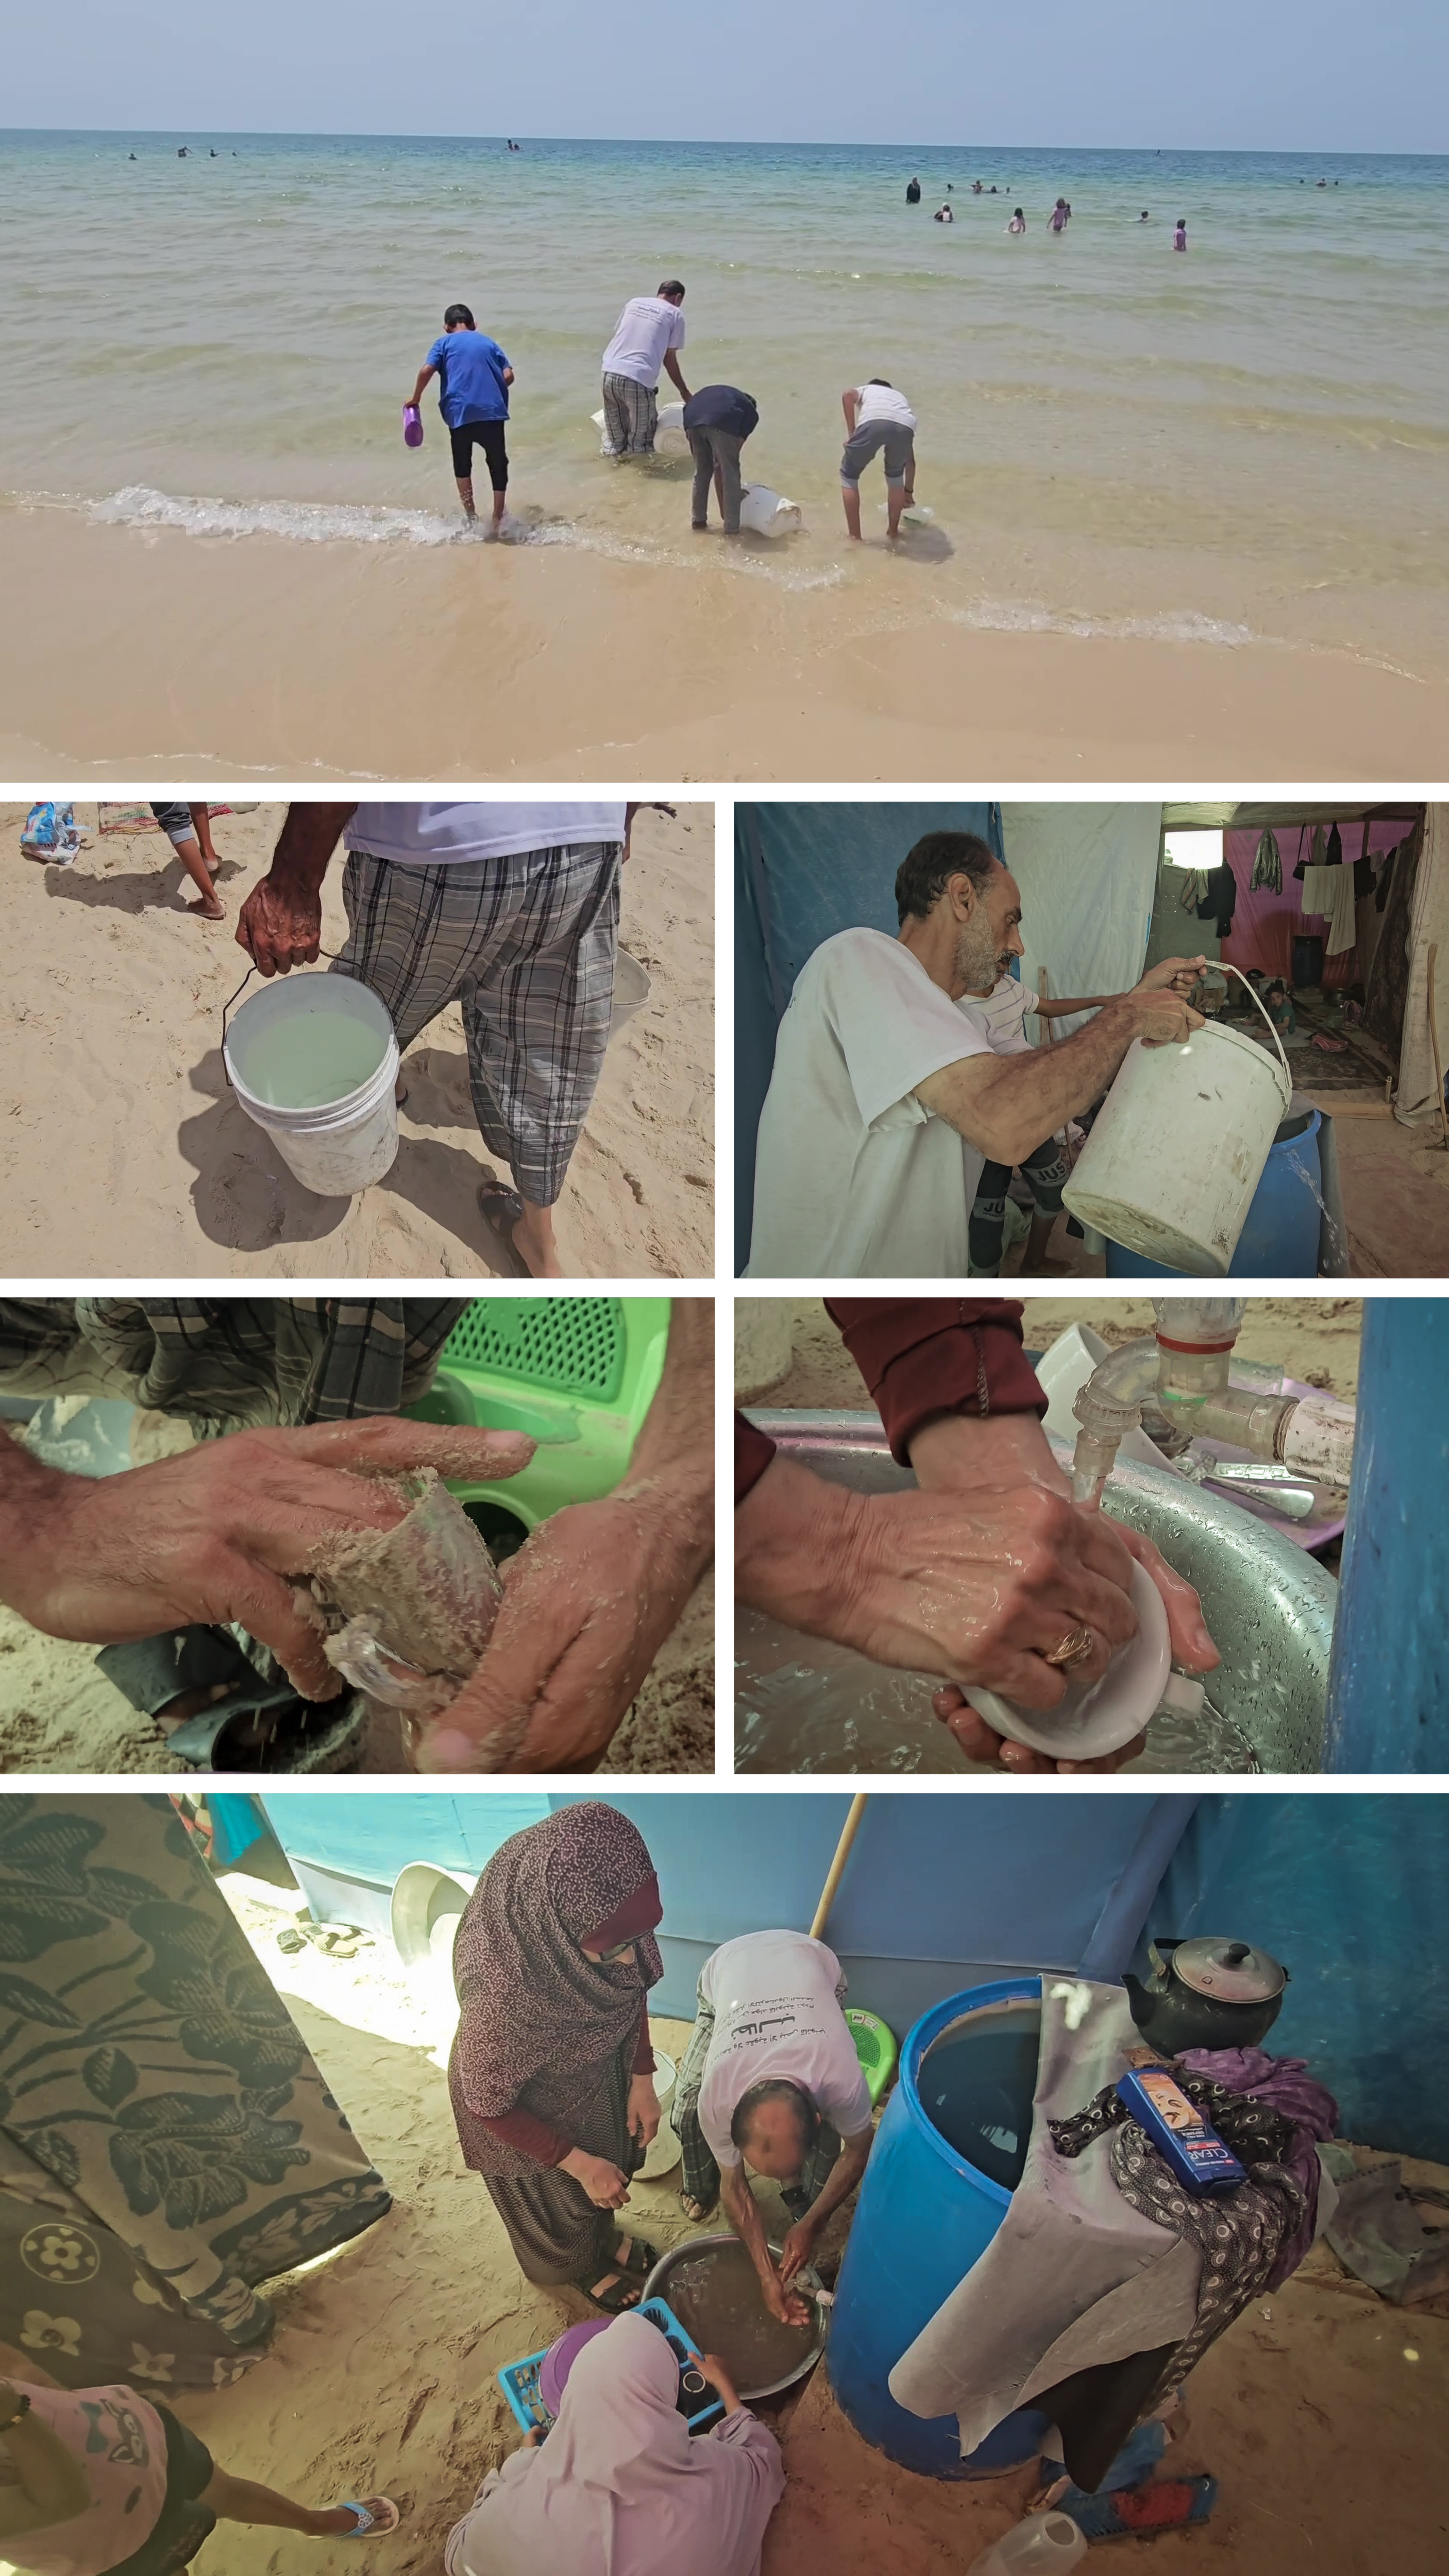 Al Awadi family use sea water to wash dishes